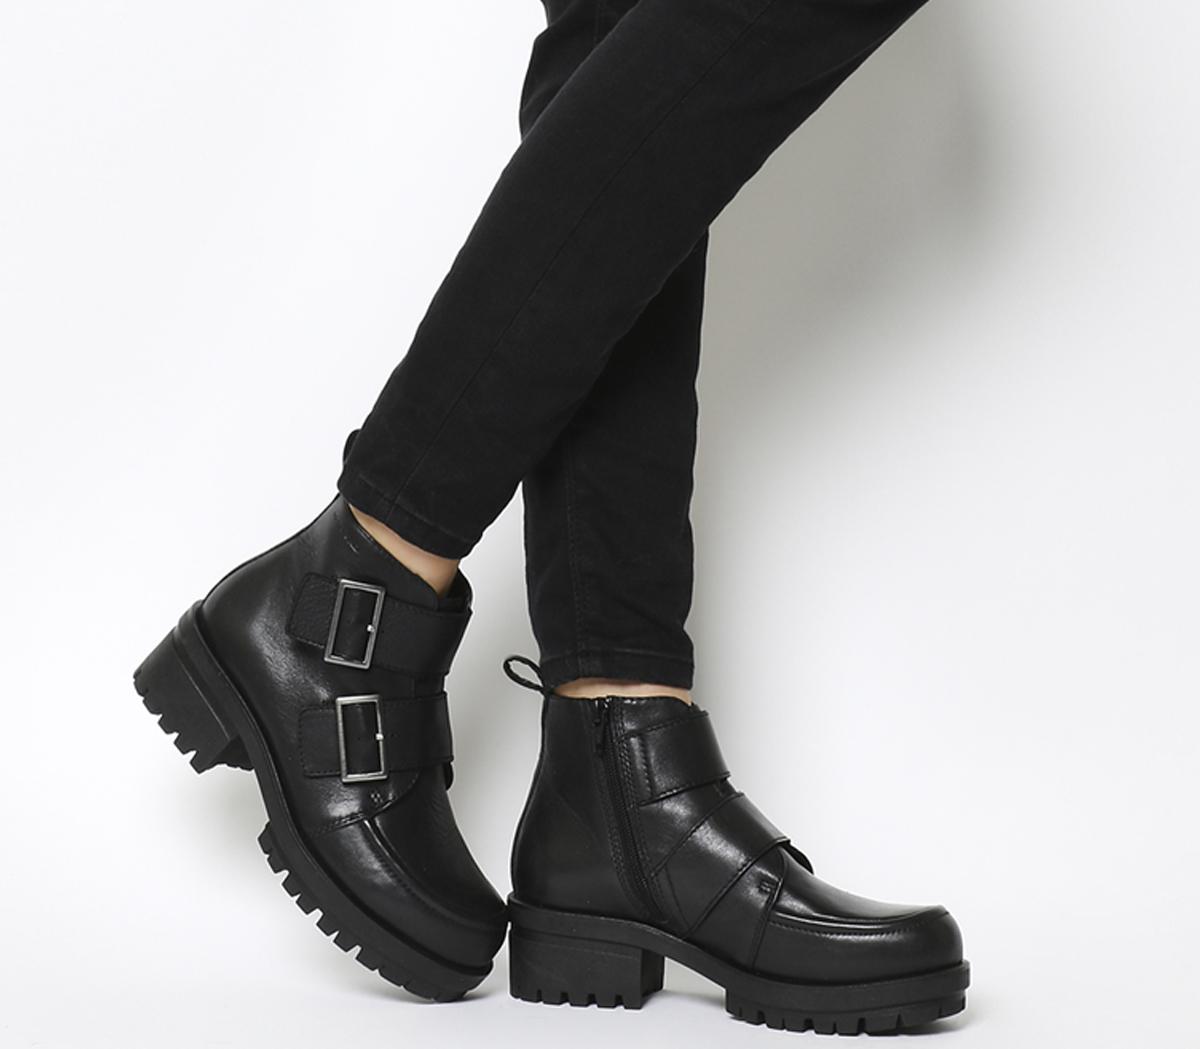 Vagabond ShoemakersStrap bootsBlack Leather